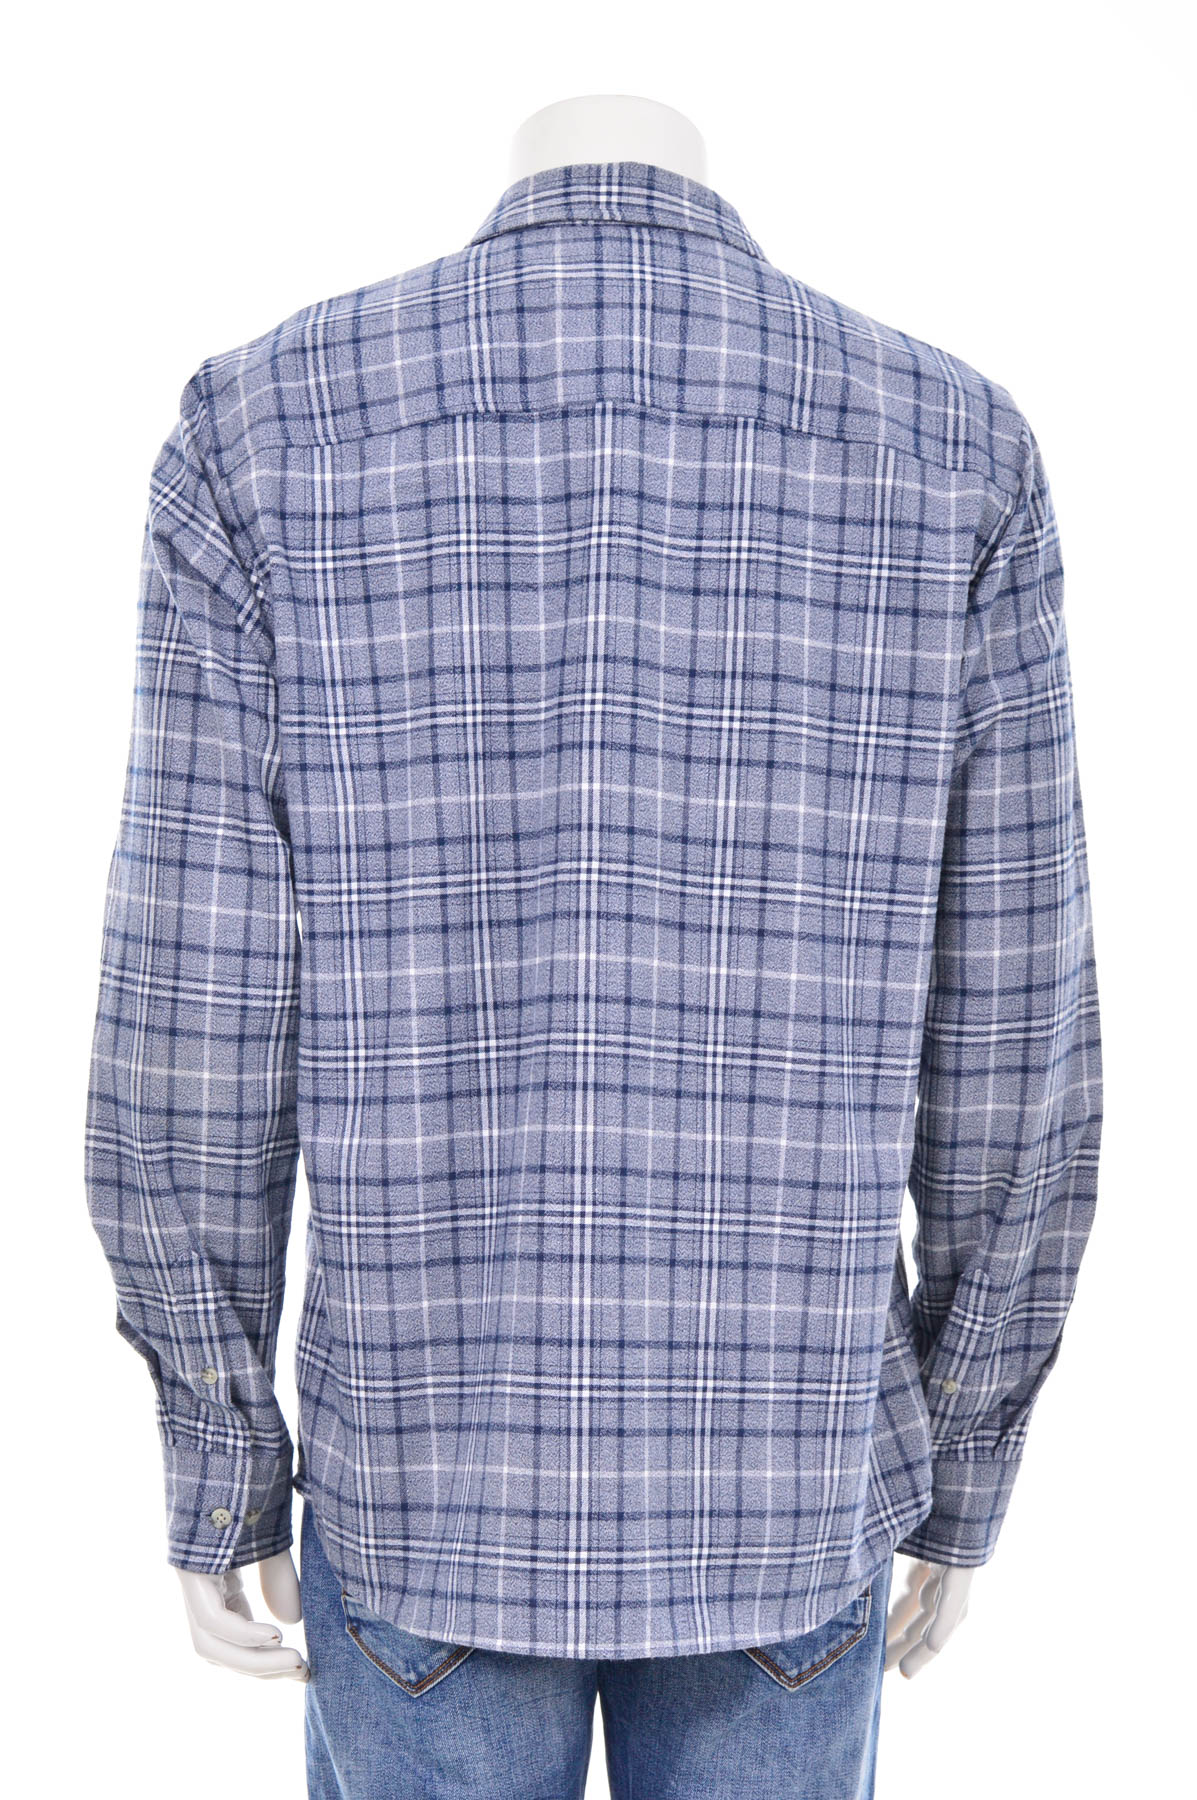 Men's shirt - Company Cotton Club - 1